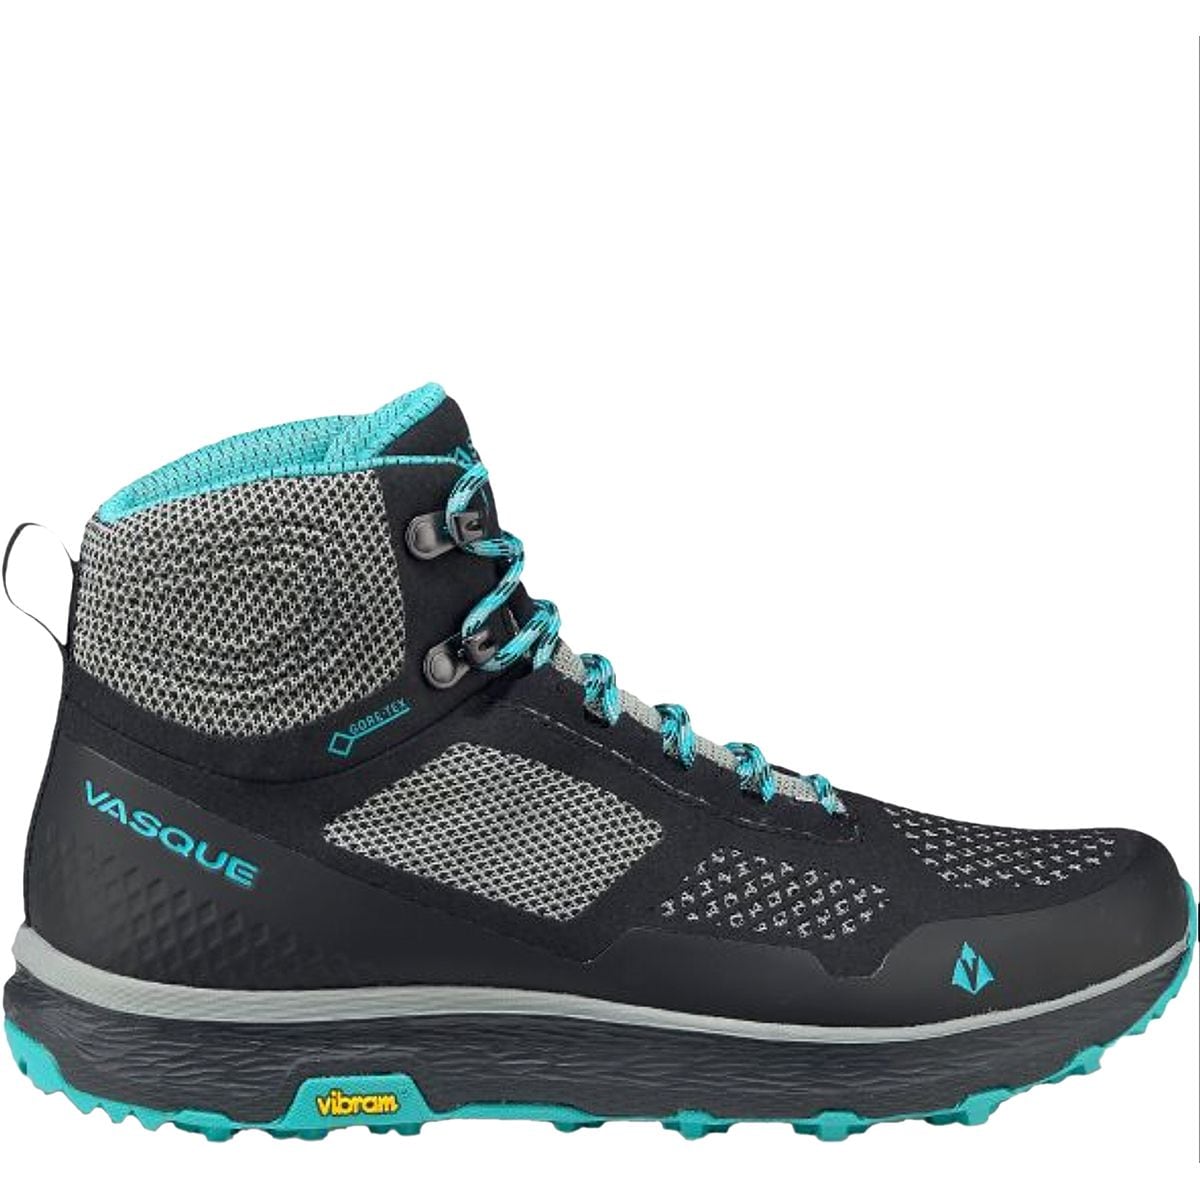 Vasque Breeze LT GTX Hiking Boot - Women's - Footwear